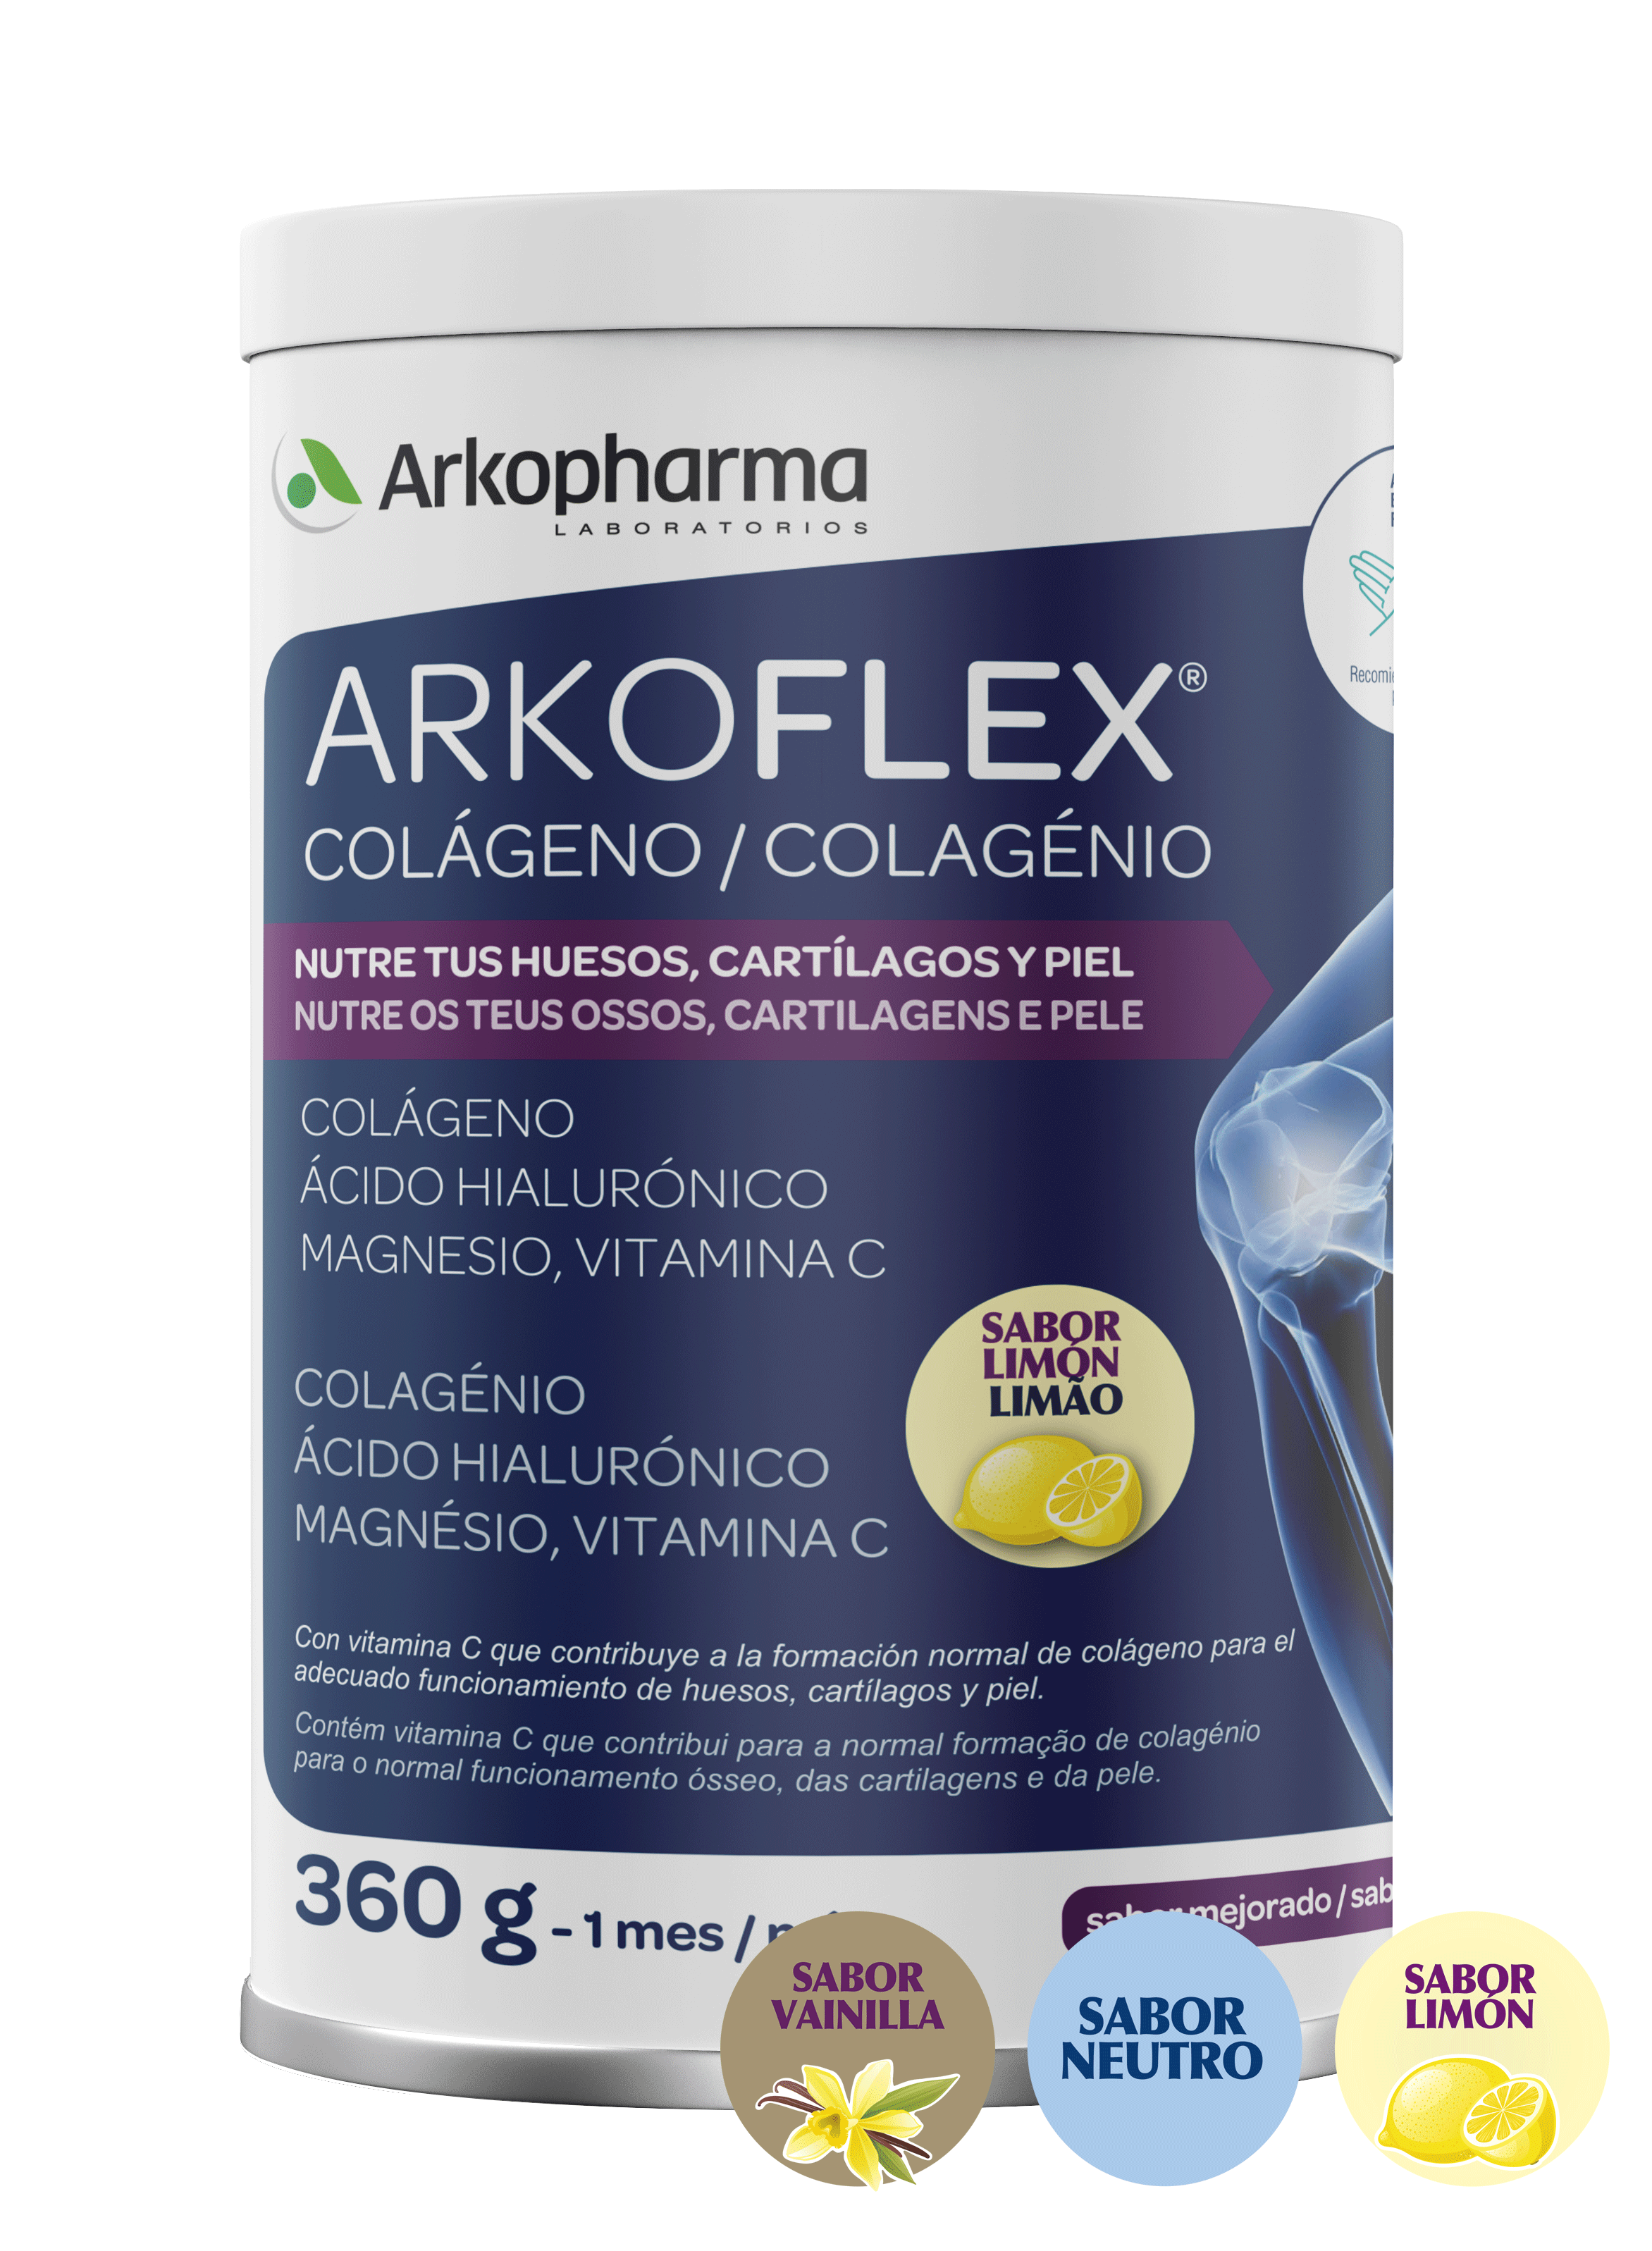 Arkoflex